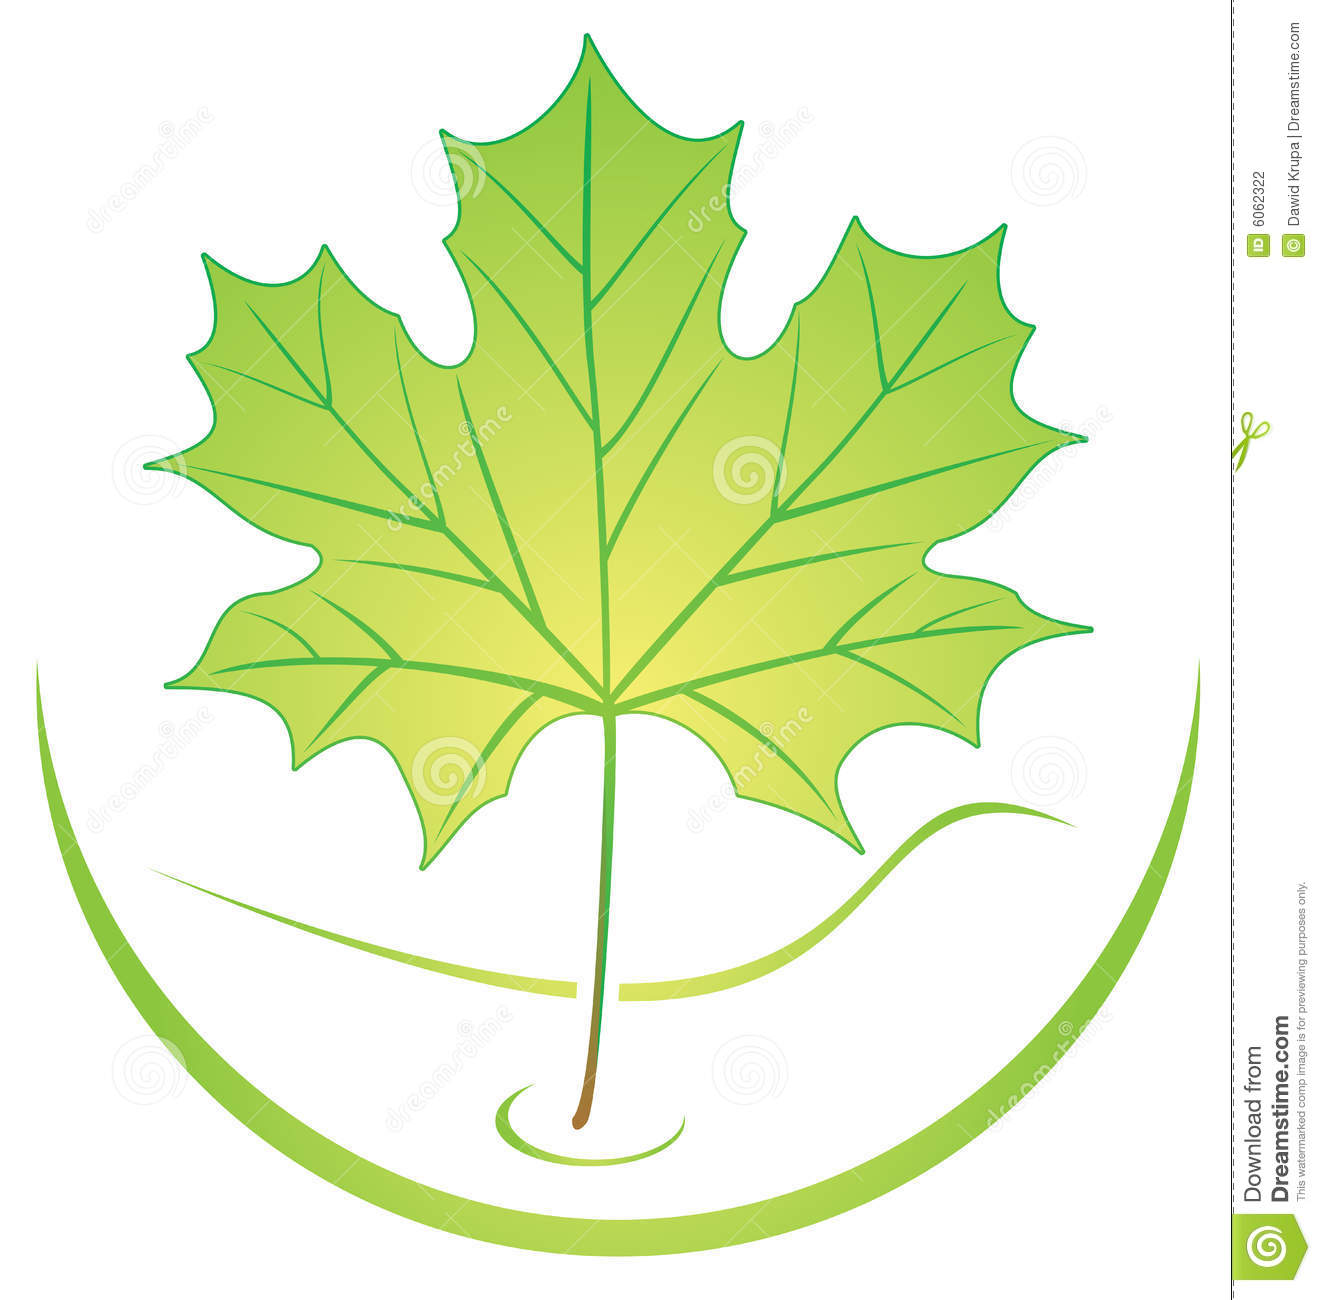 Companies with Green Leaf Logo